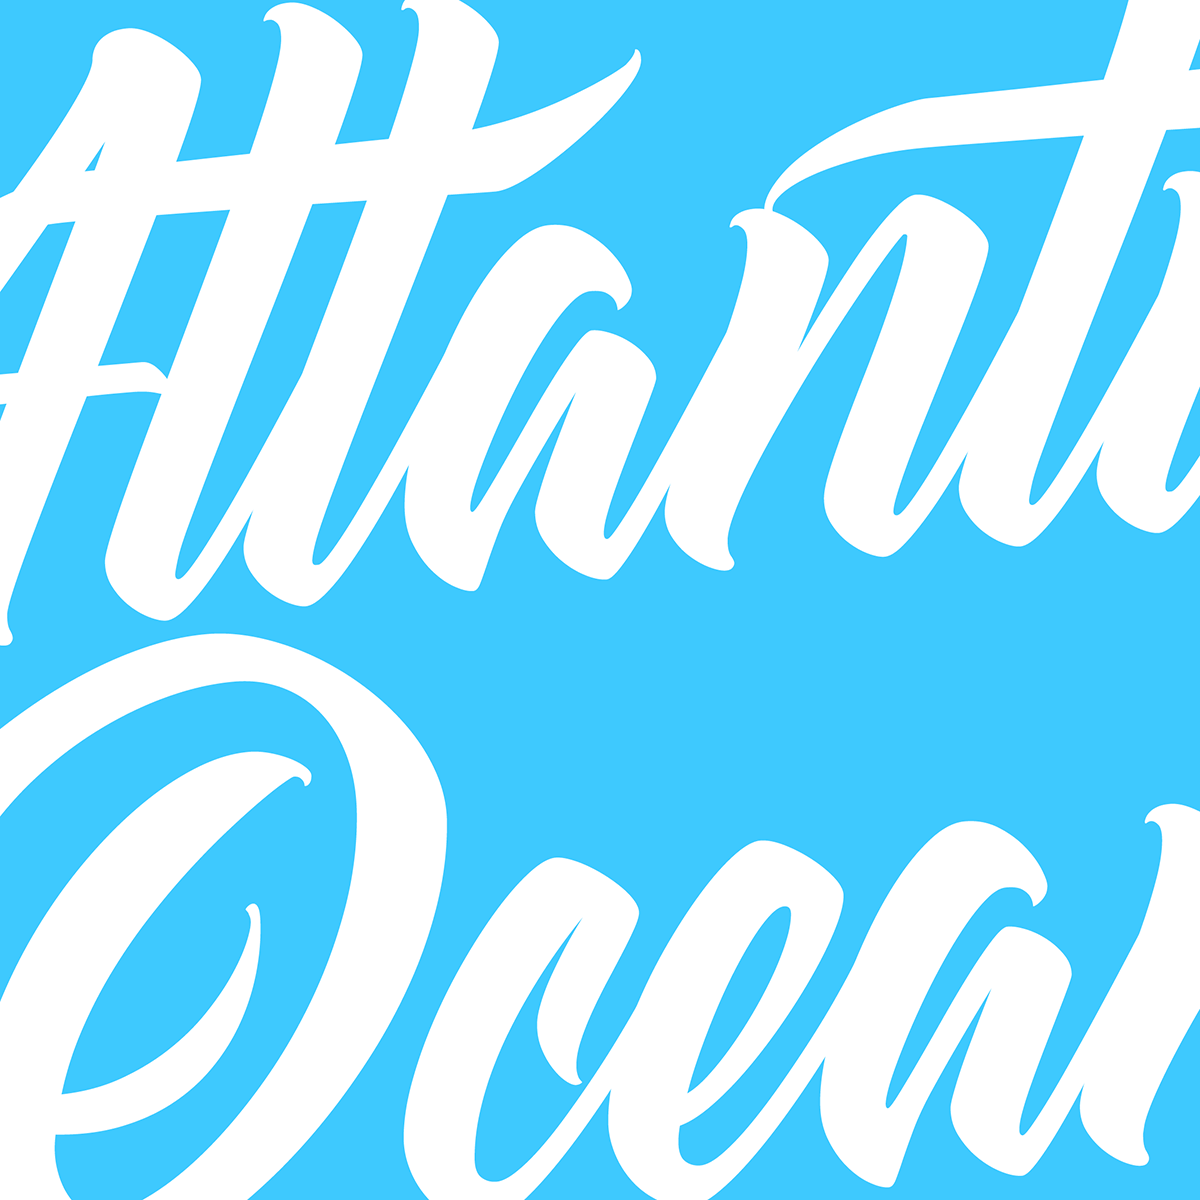 Zetafonts' new typeface Atlantica 